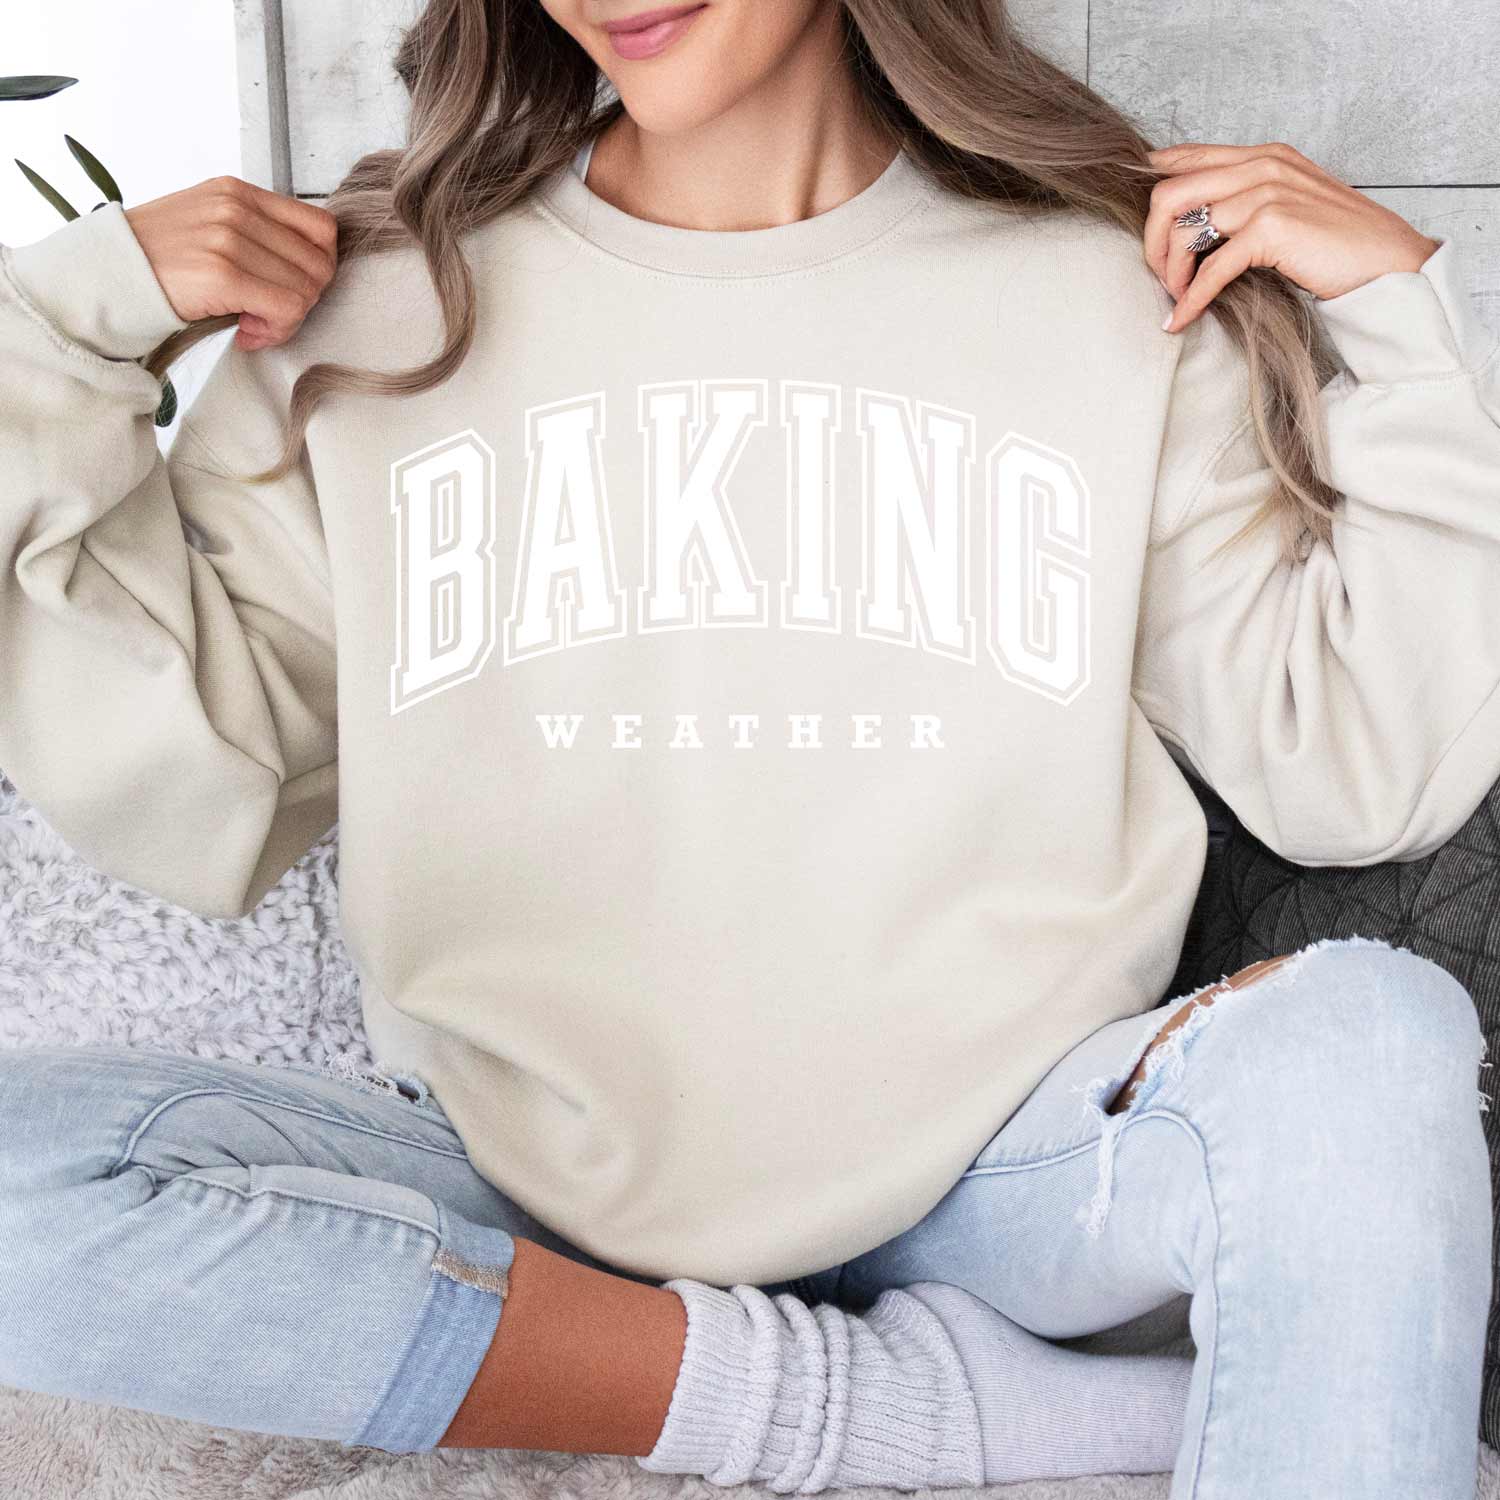 Baking Weather White Ink Unisex Sweatshirt